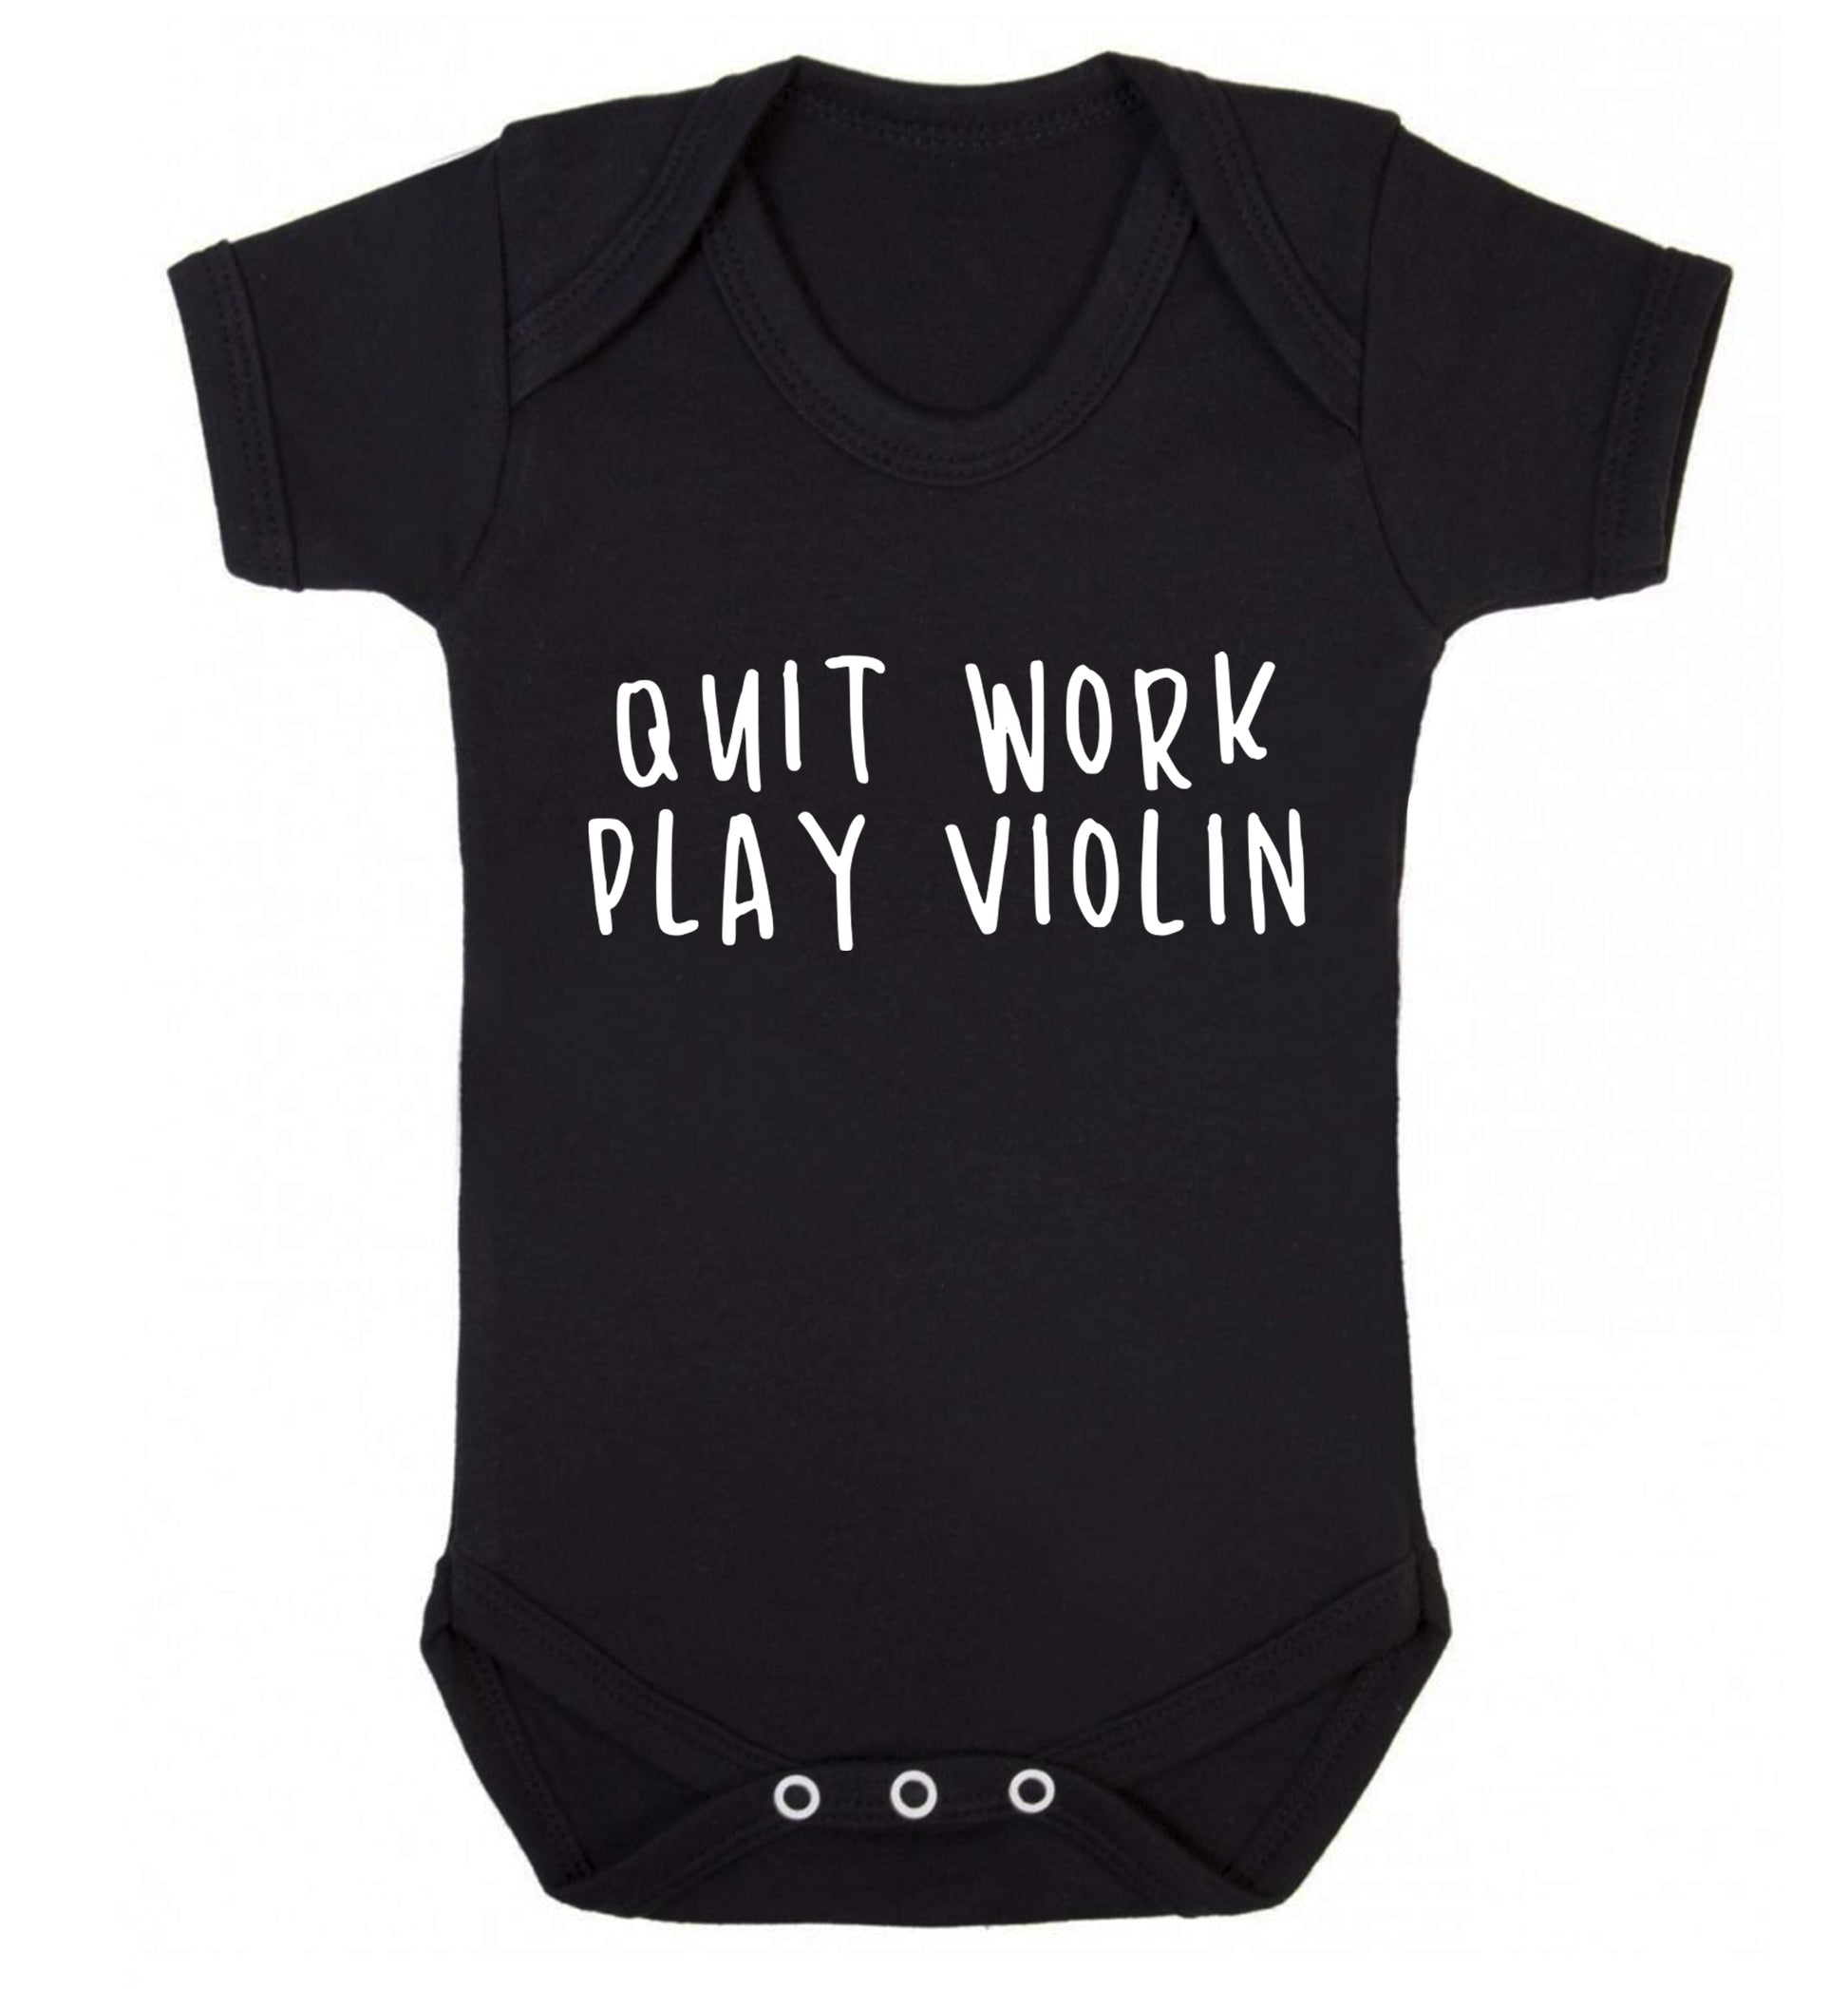 Quit work play violin Baby Vest black 18-24 months